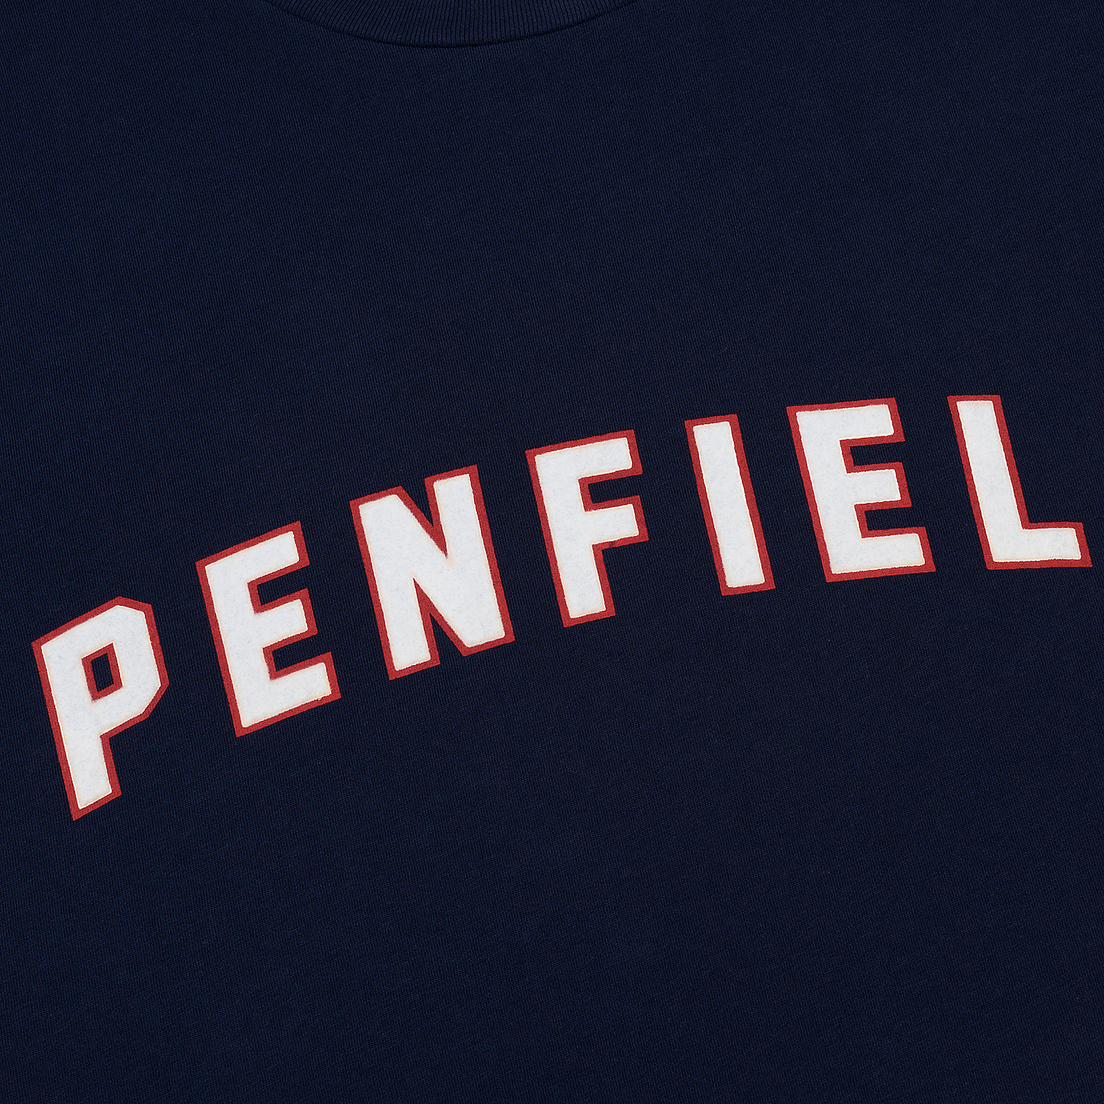 Penfield Мужская футболка Angelo Graphic